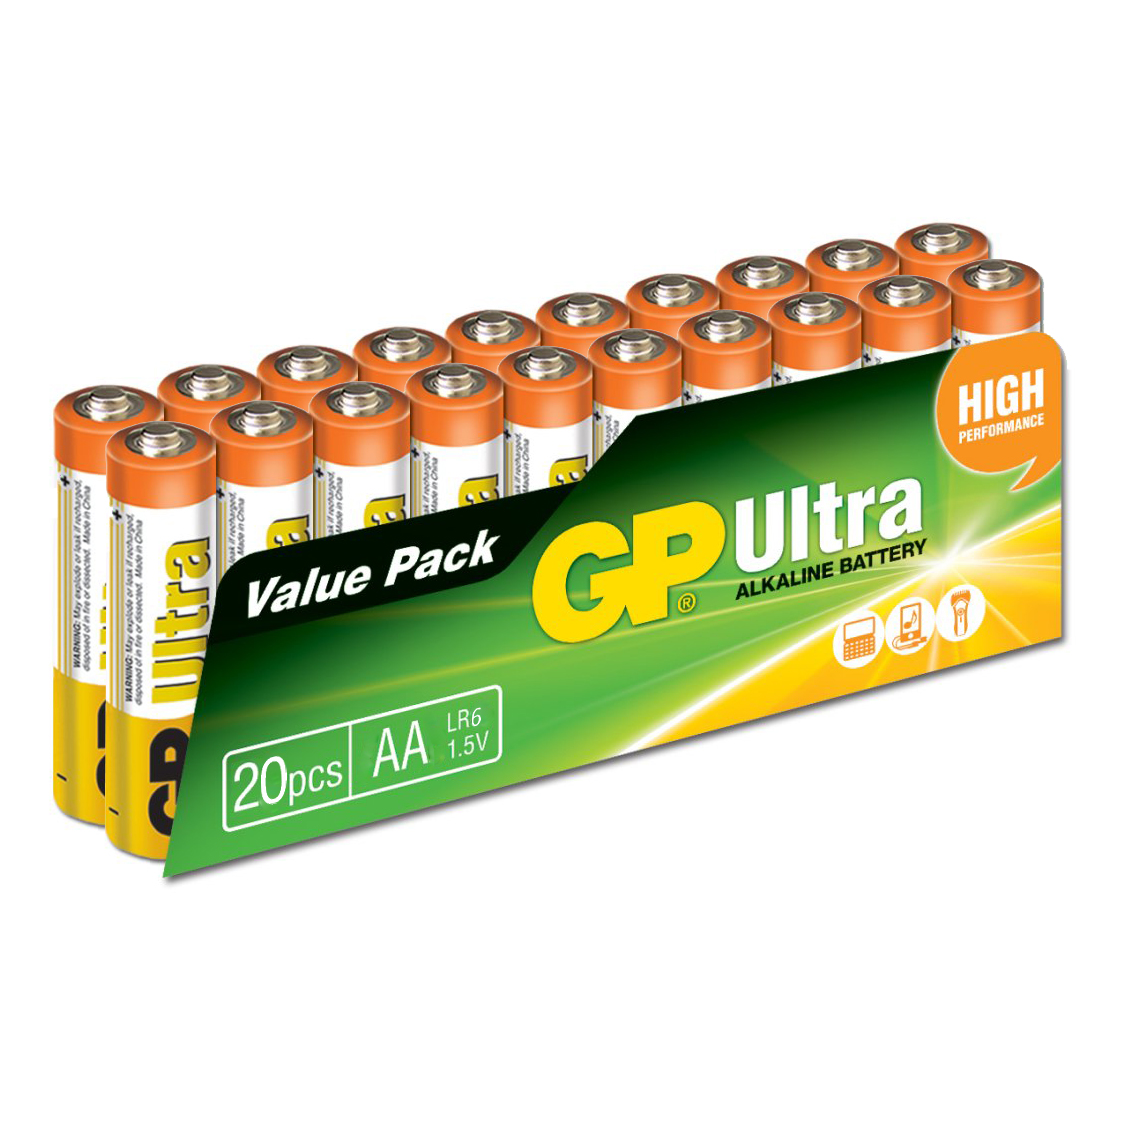 Gp alkaline battery. Батарейки GP Ultra Alkaline. Элемент питания GP lr06 Ultra. Батарейка GP Ultra АА lr6. GP Ultra Alkaline 15au lr6 AA. Товарный знак - GP Batteries.